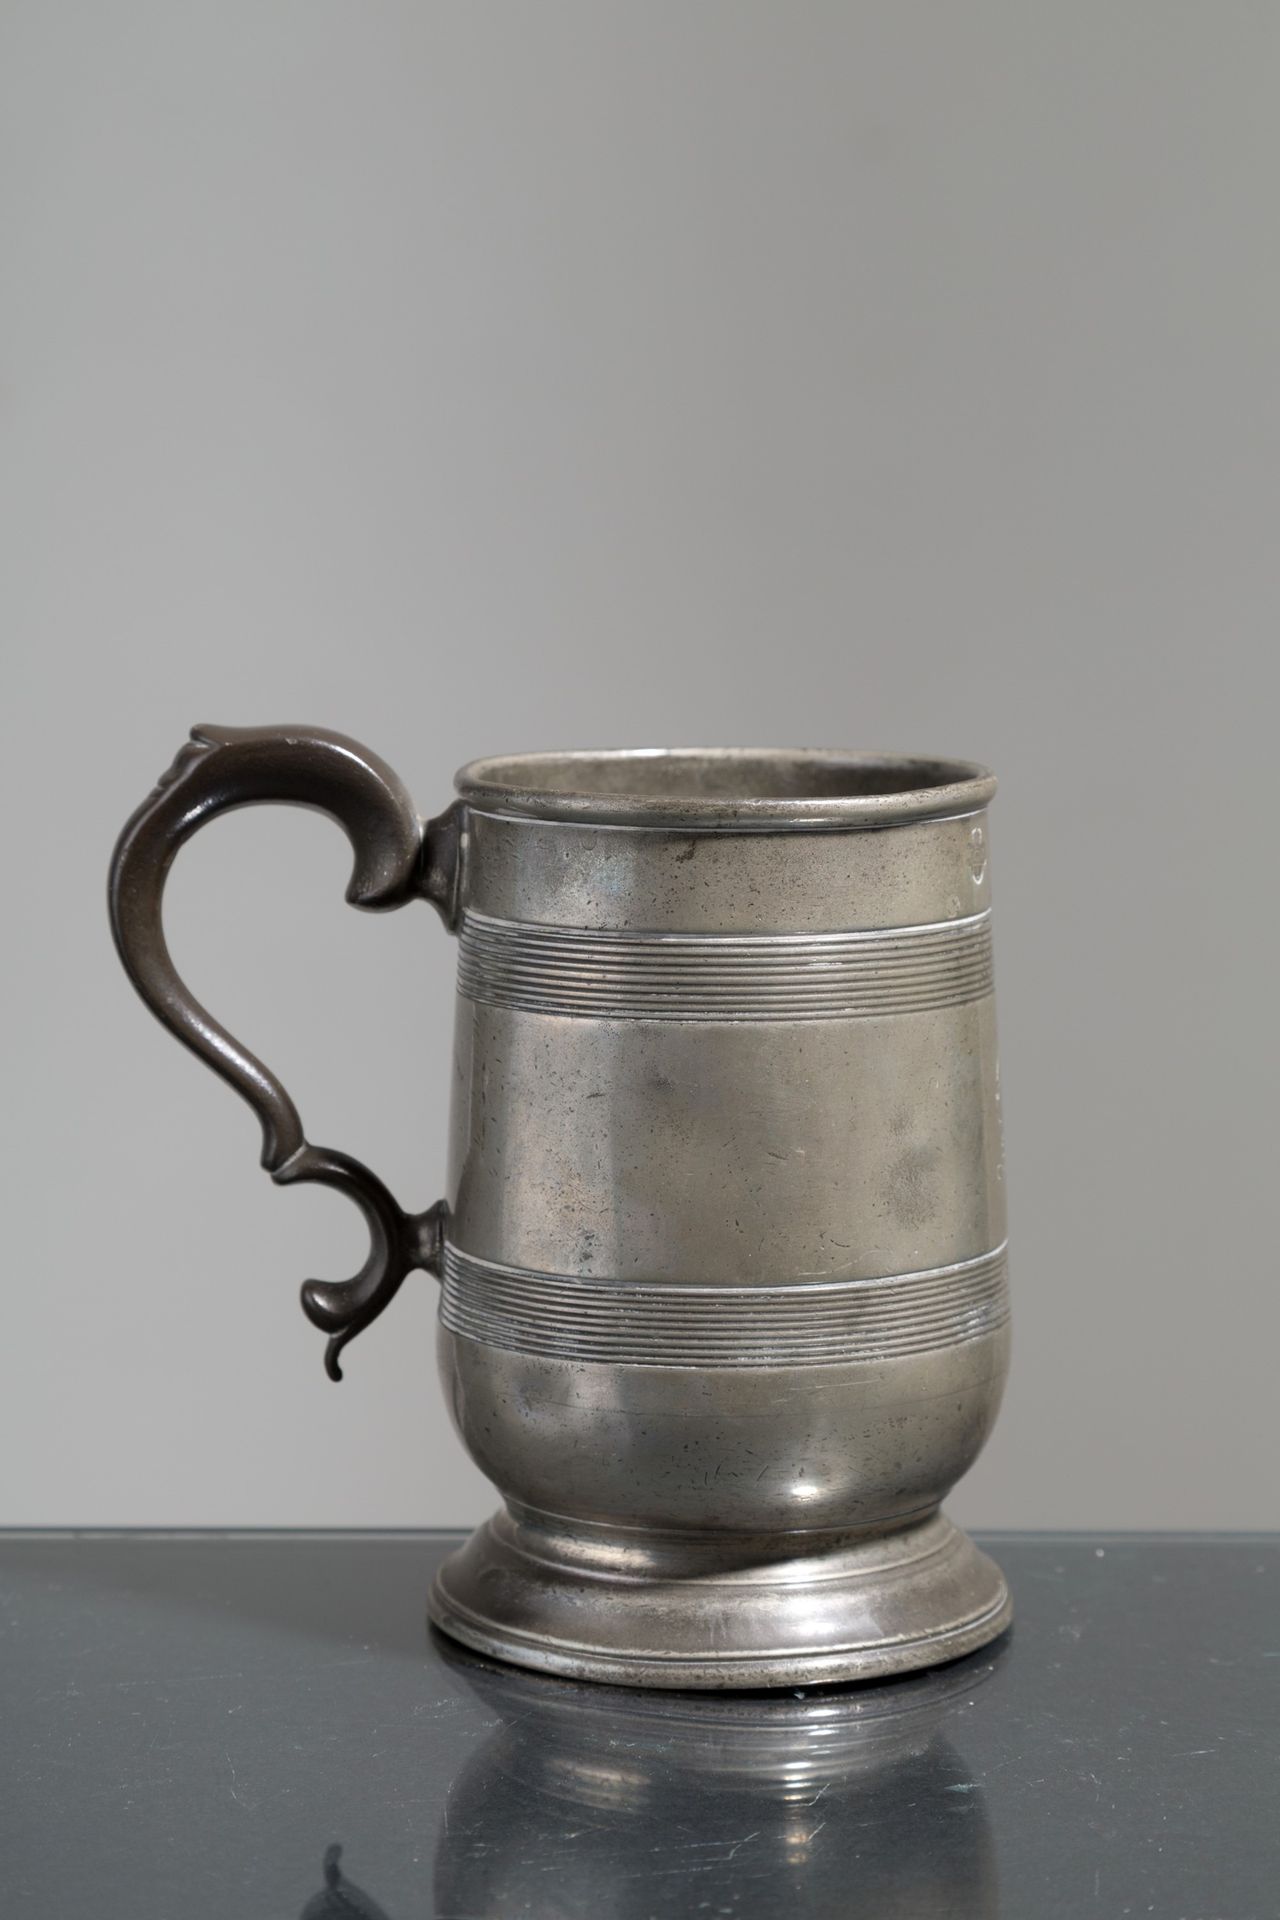 Pewter tankard 锡镴杯。19世纪。